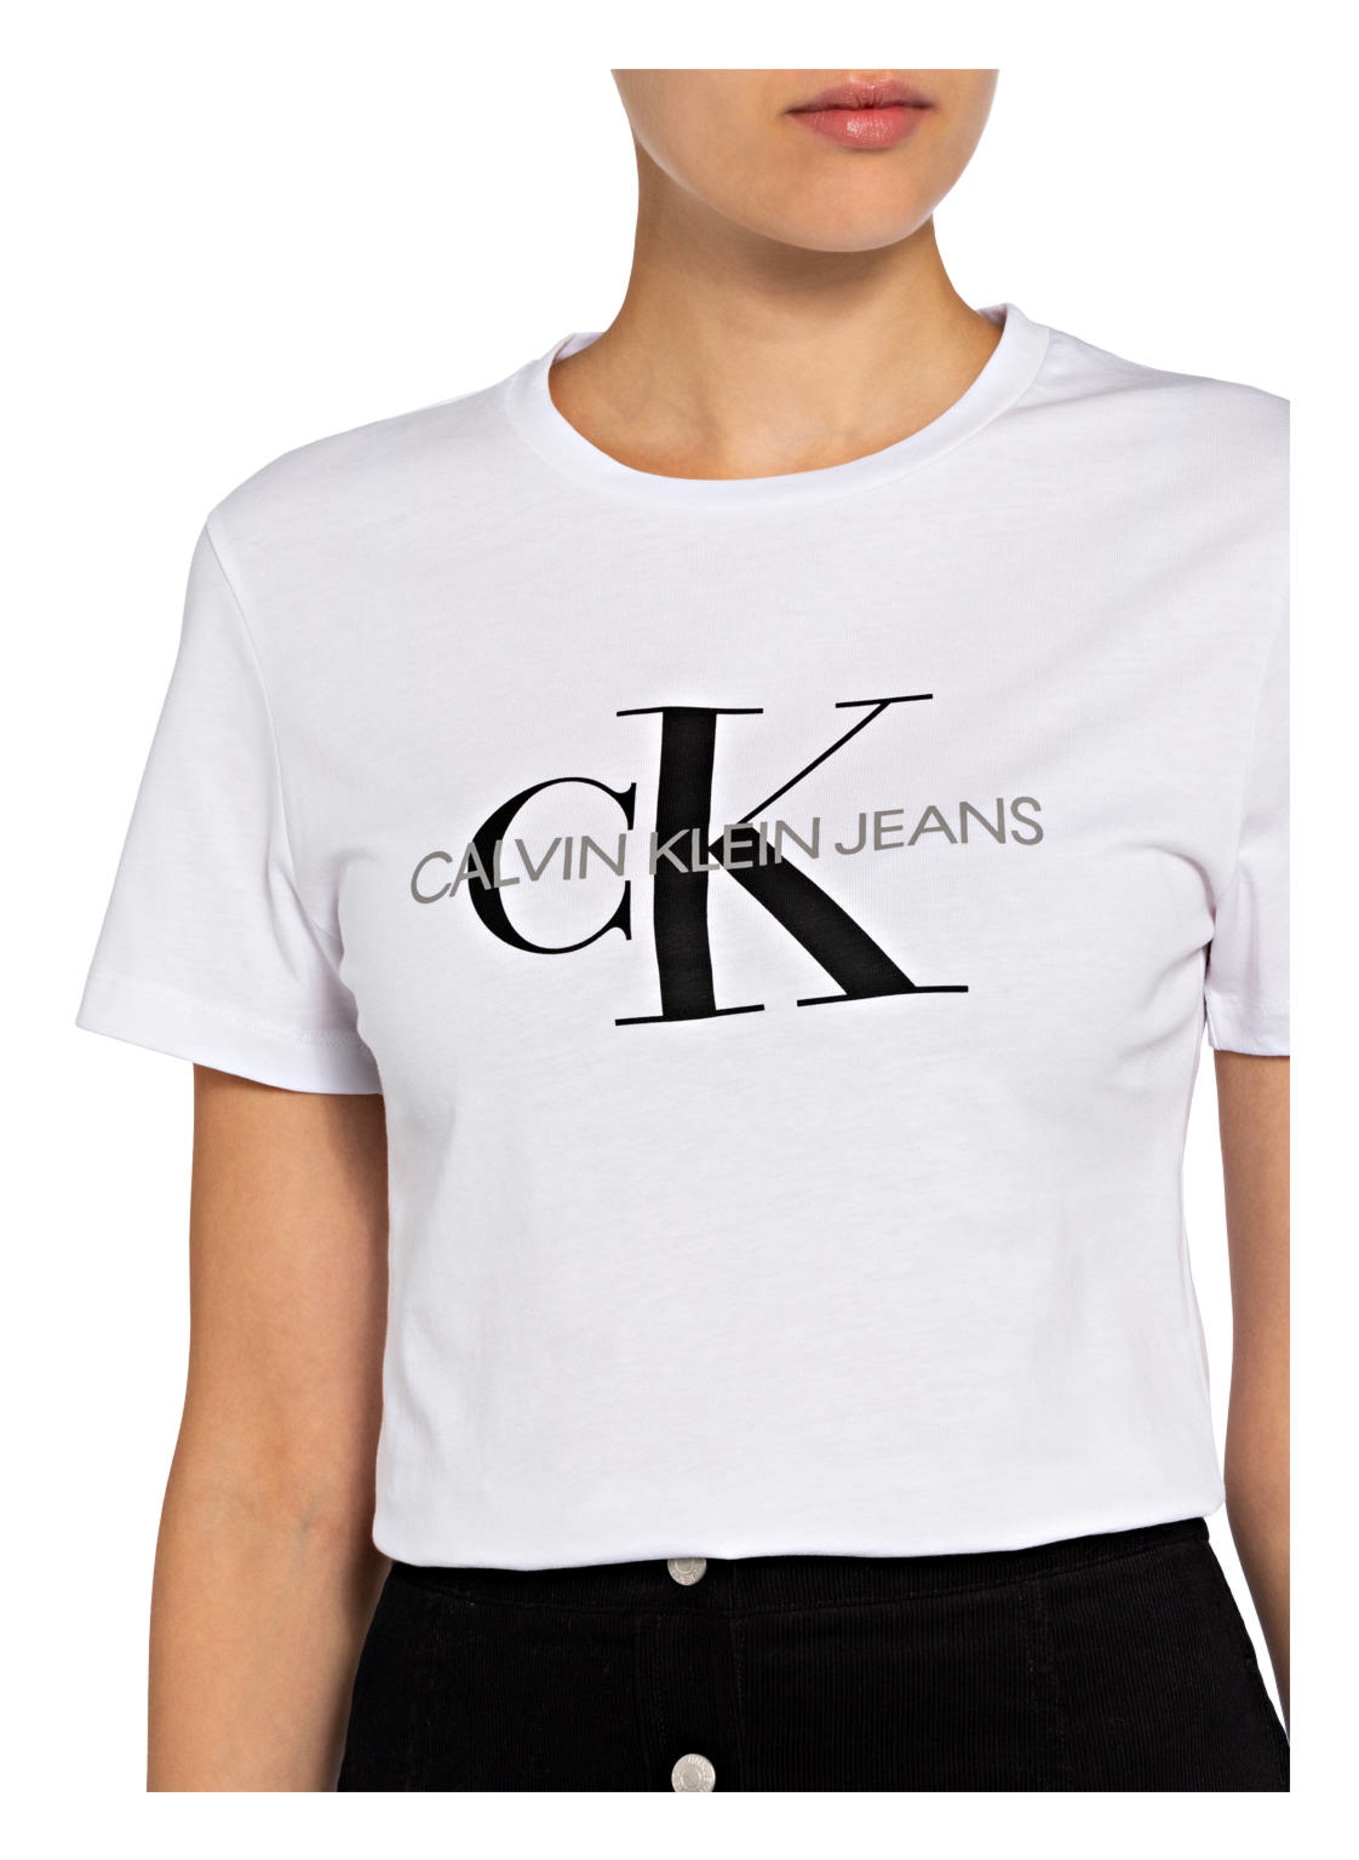 Calvin Klein Jeans weiss in T-Shirt